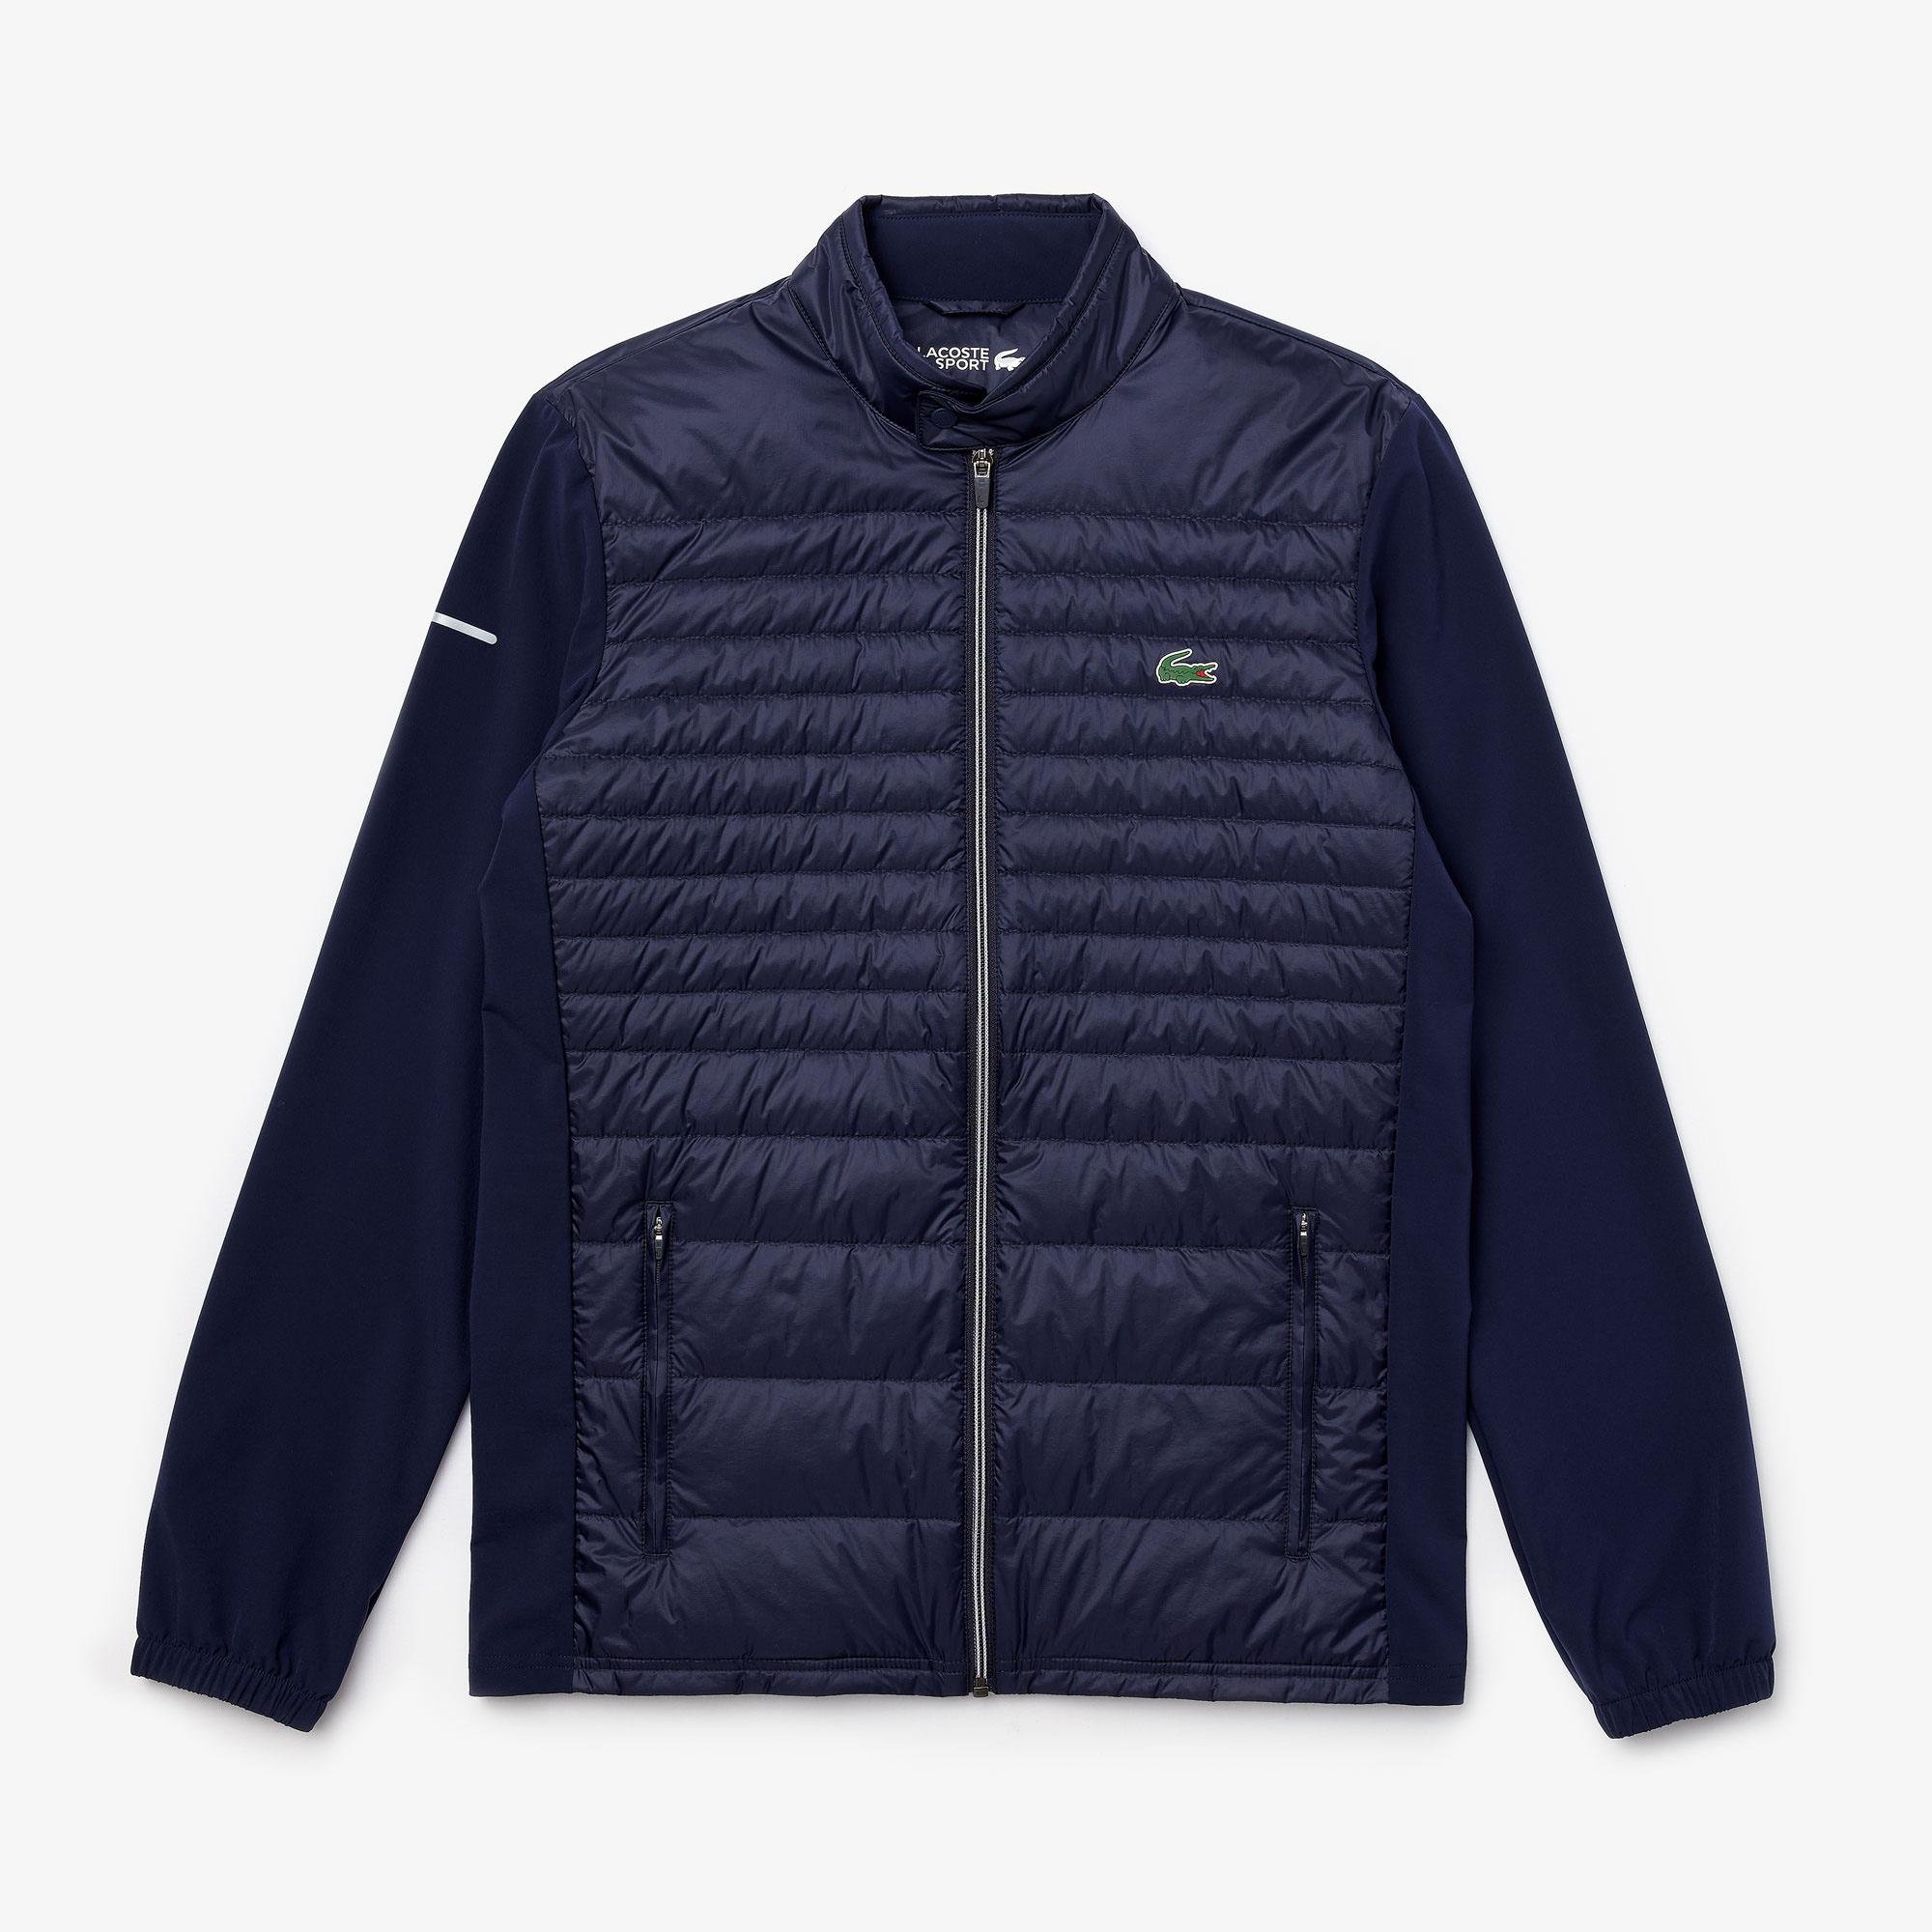 Lacoste Men's Sport Lightweight Water-Resistant Quilted Golf Jacket